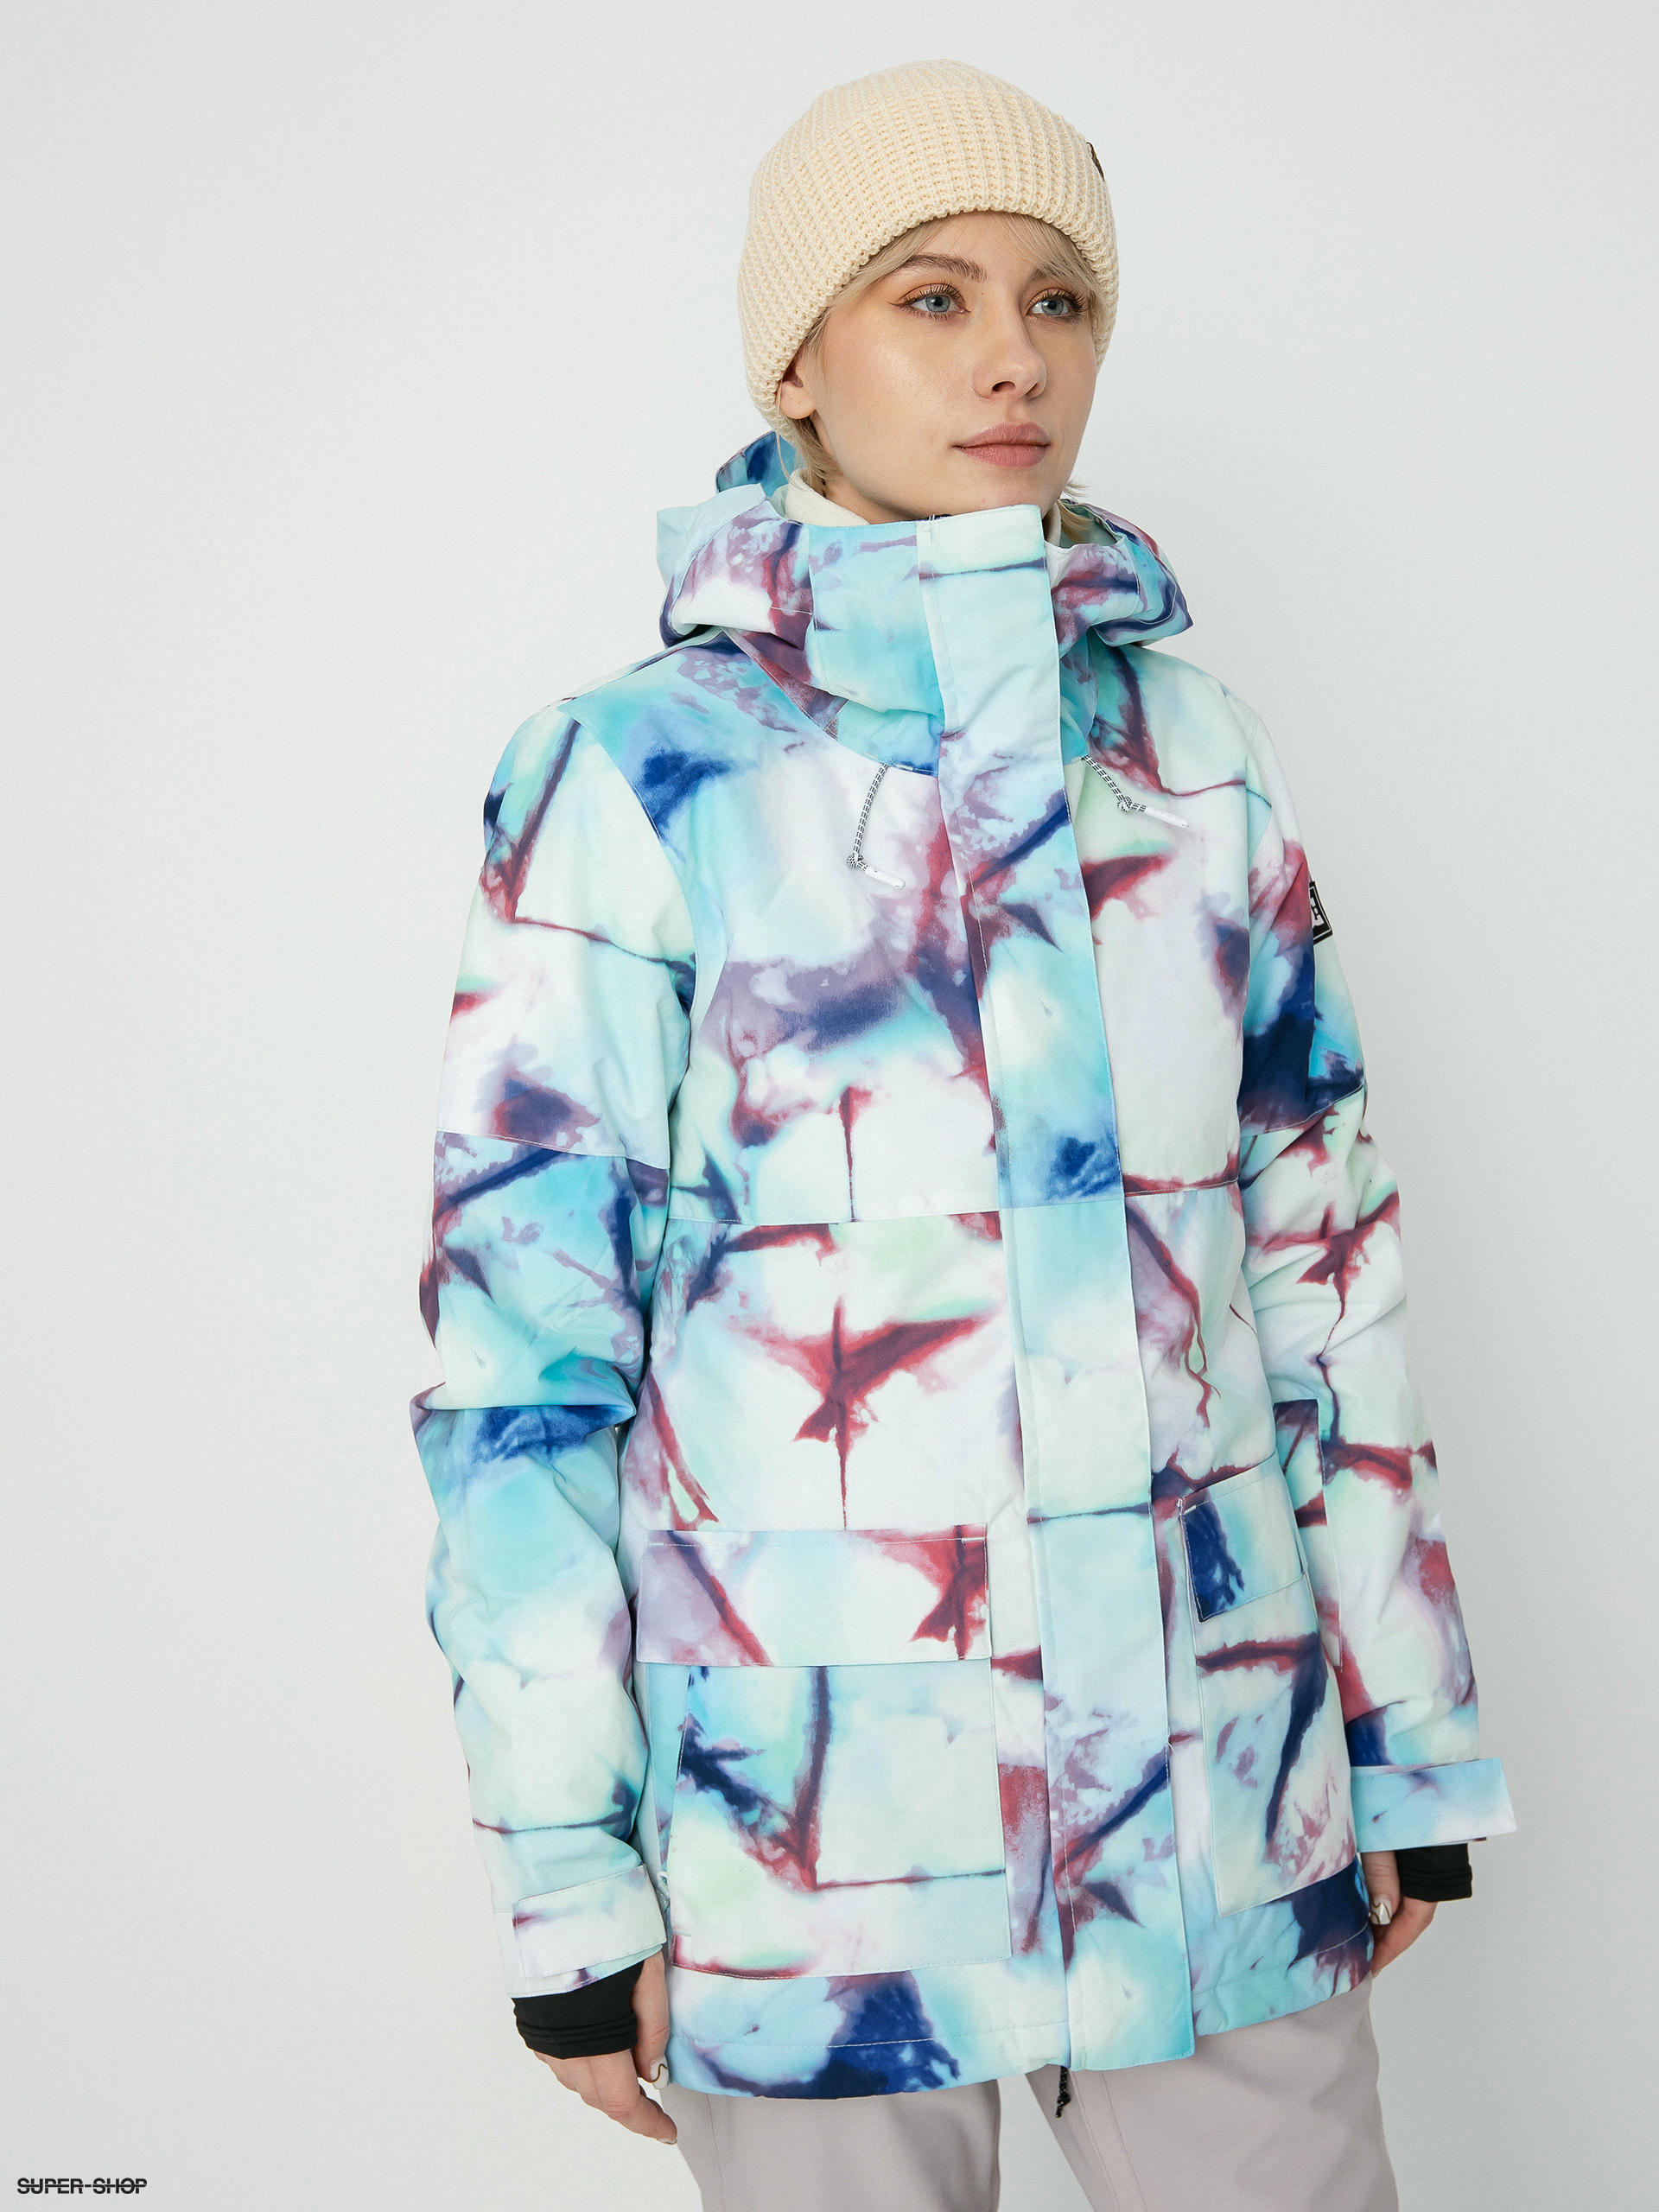 DC Cruiser Snowboard jacket Wmn (iridescent)